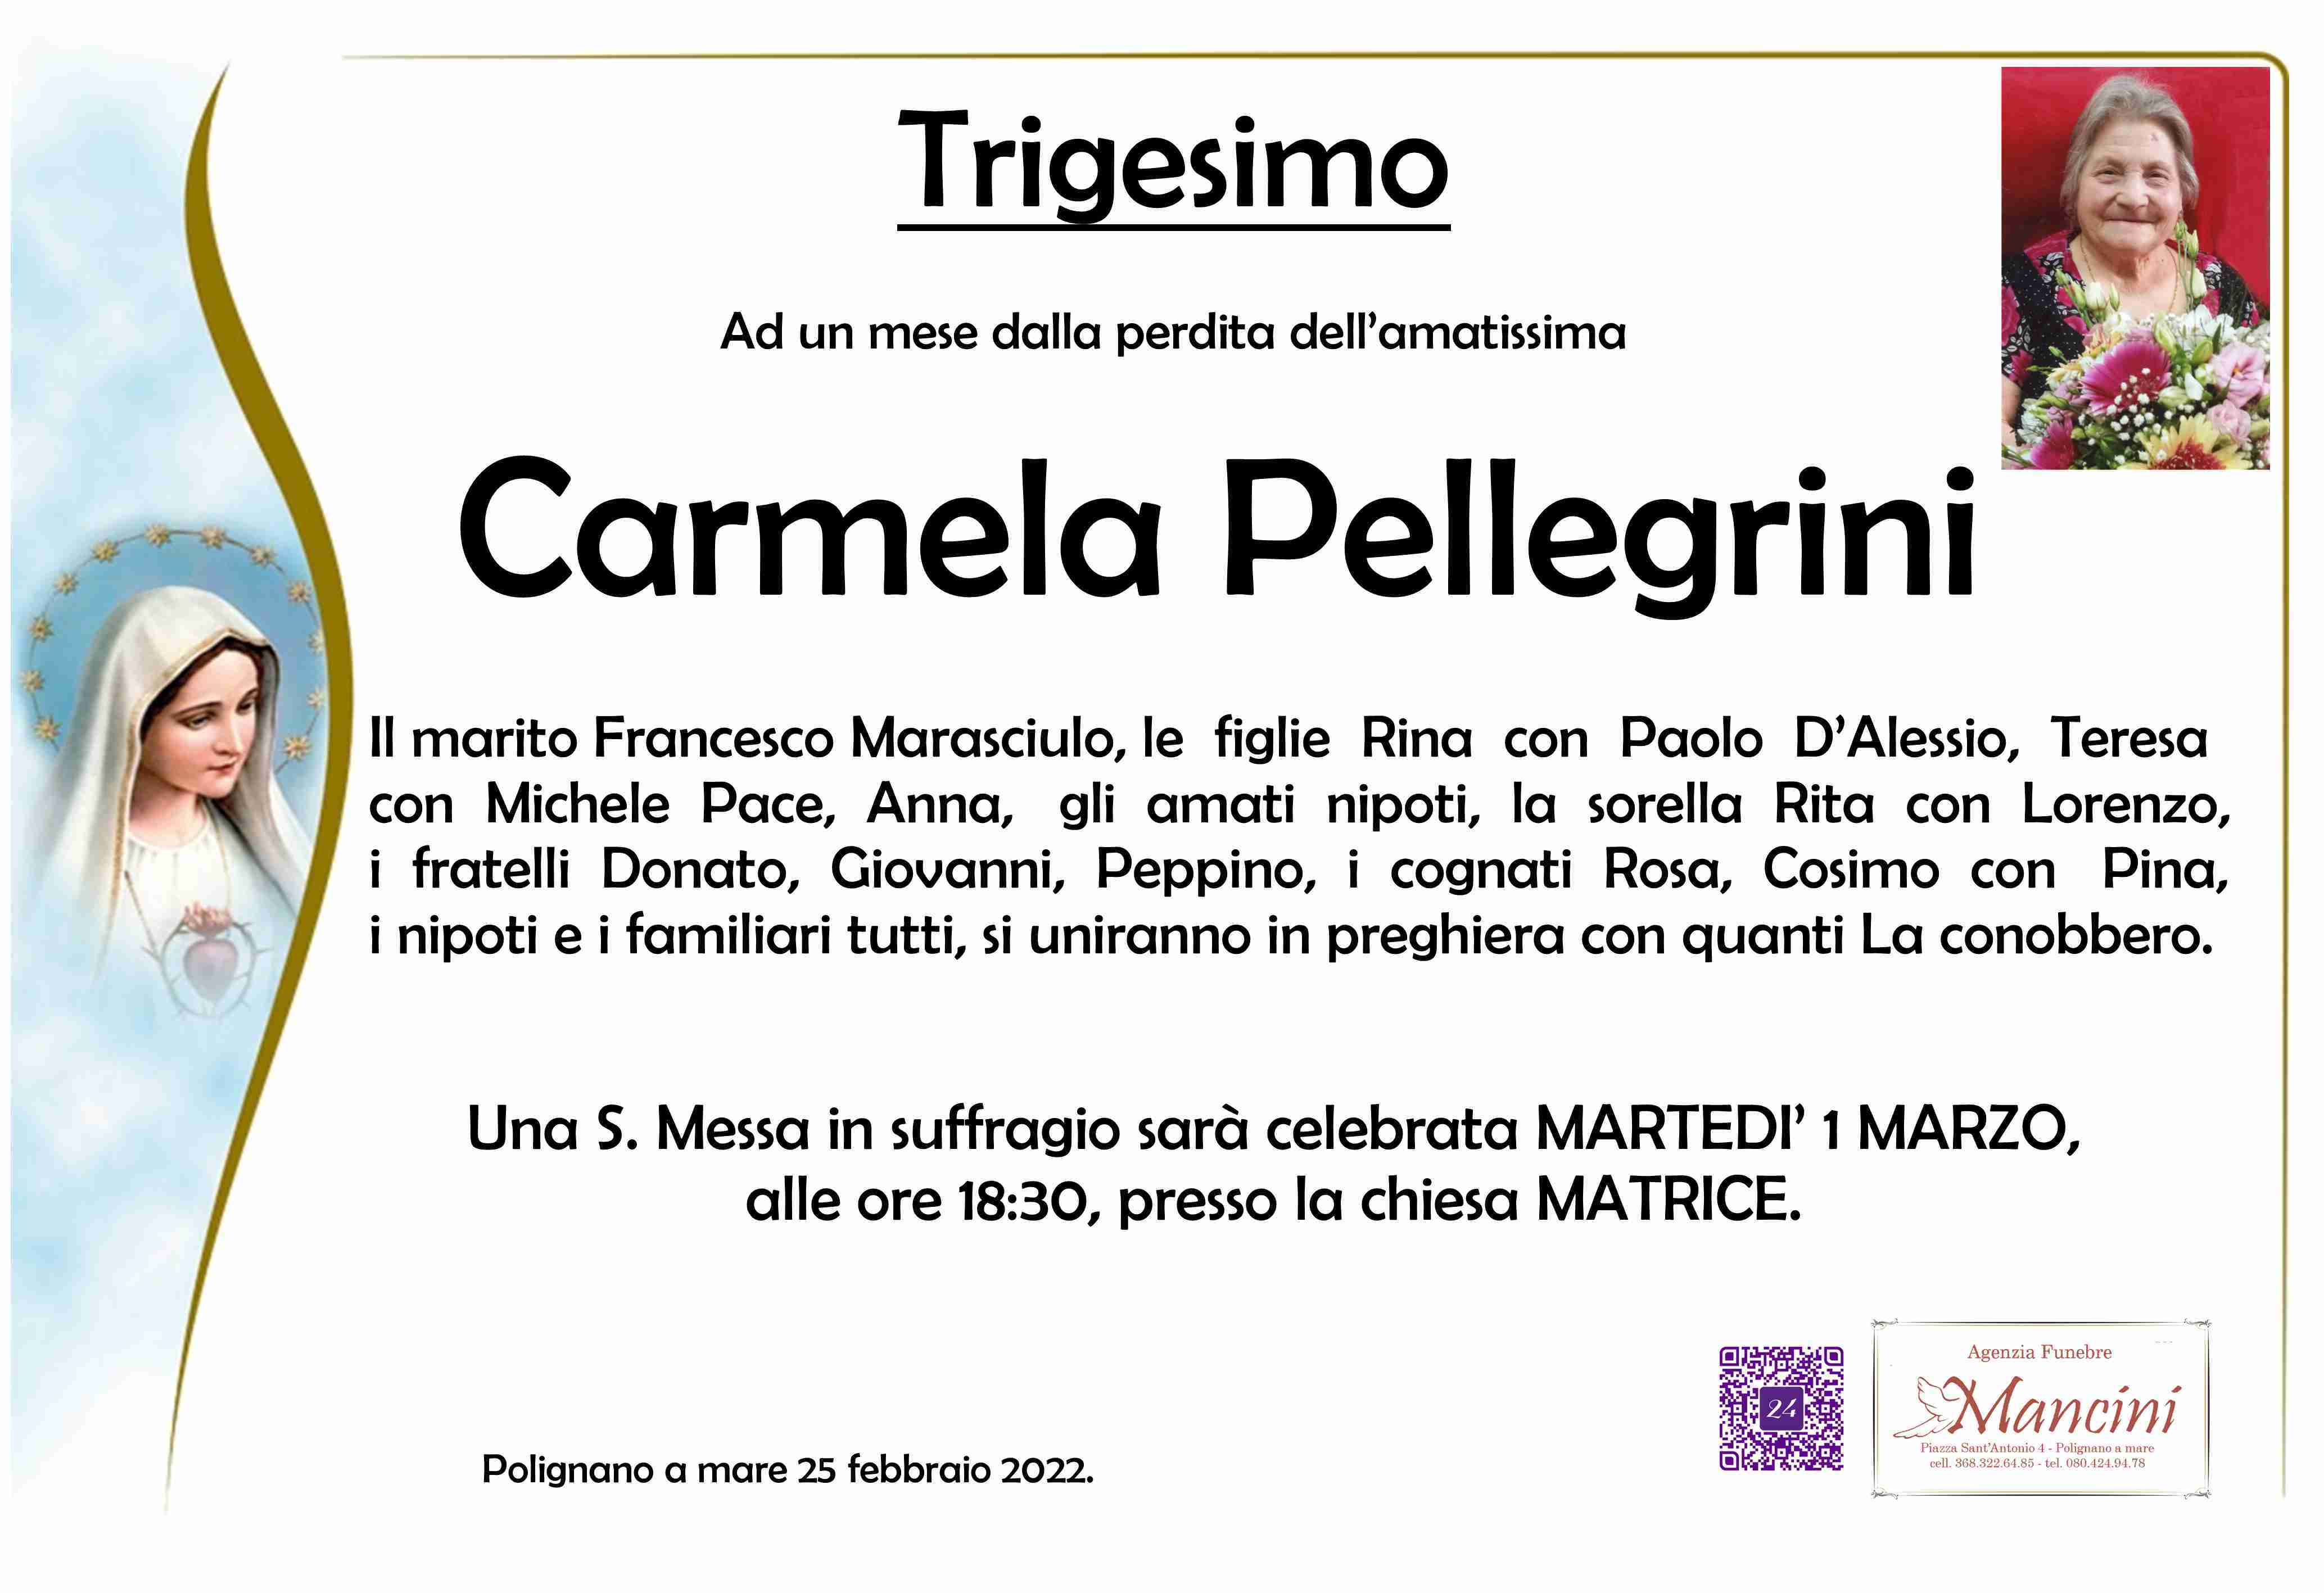 Carmela Pellegrini